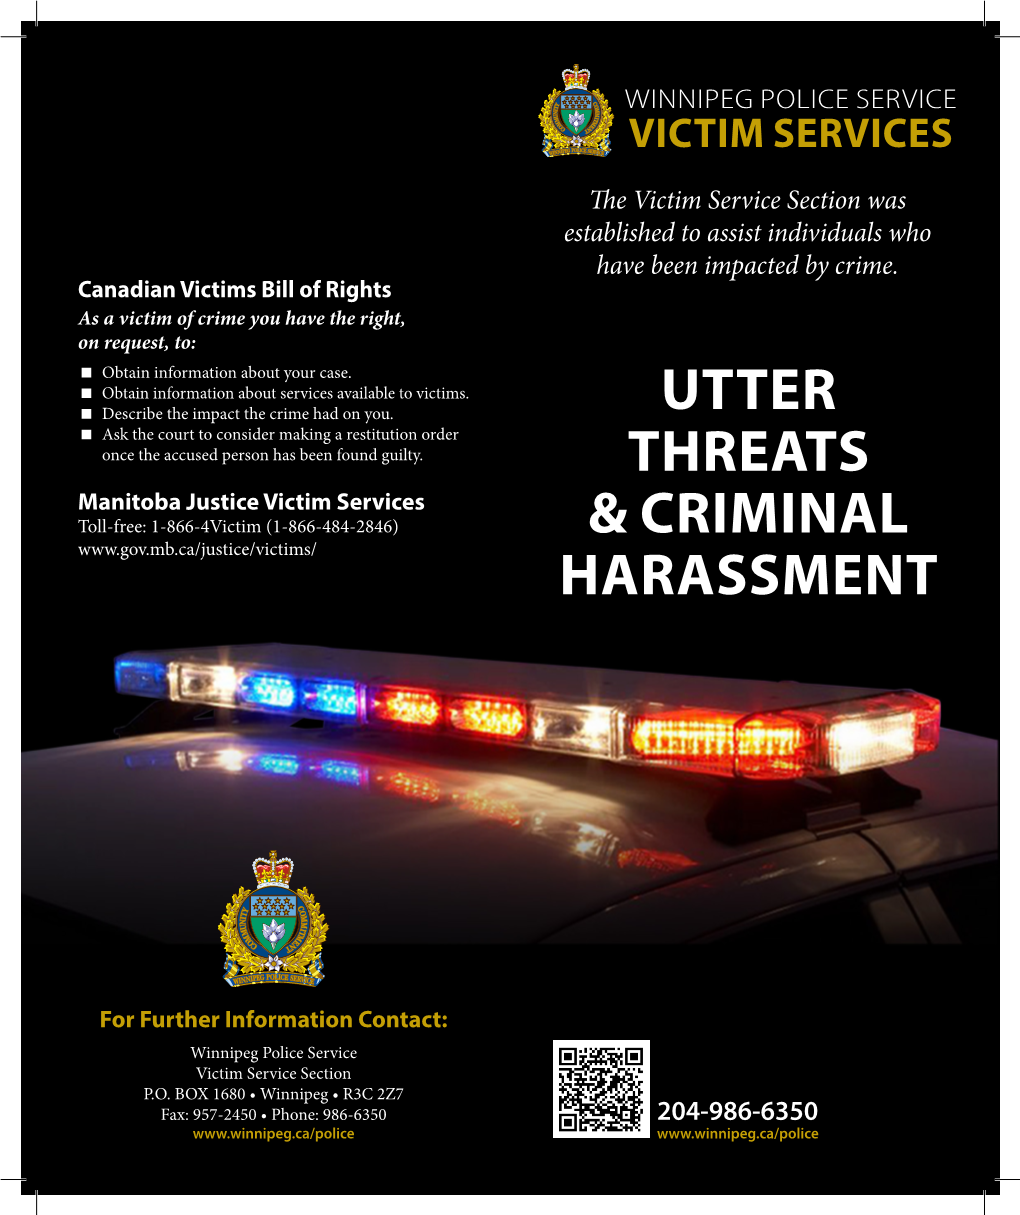 Utter Threats & Criminal Harassment